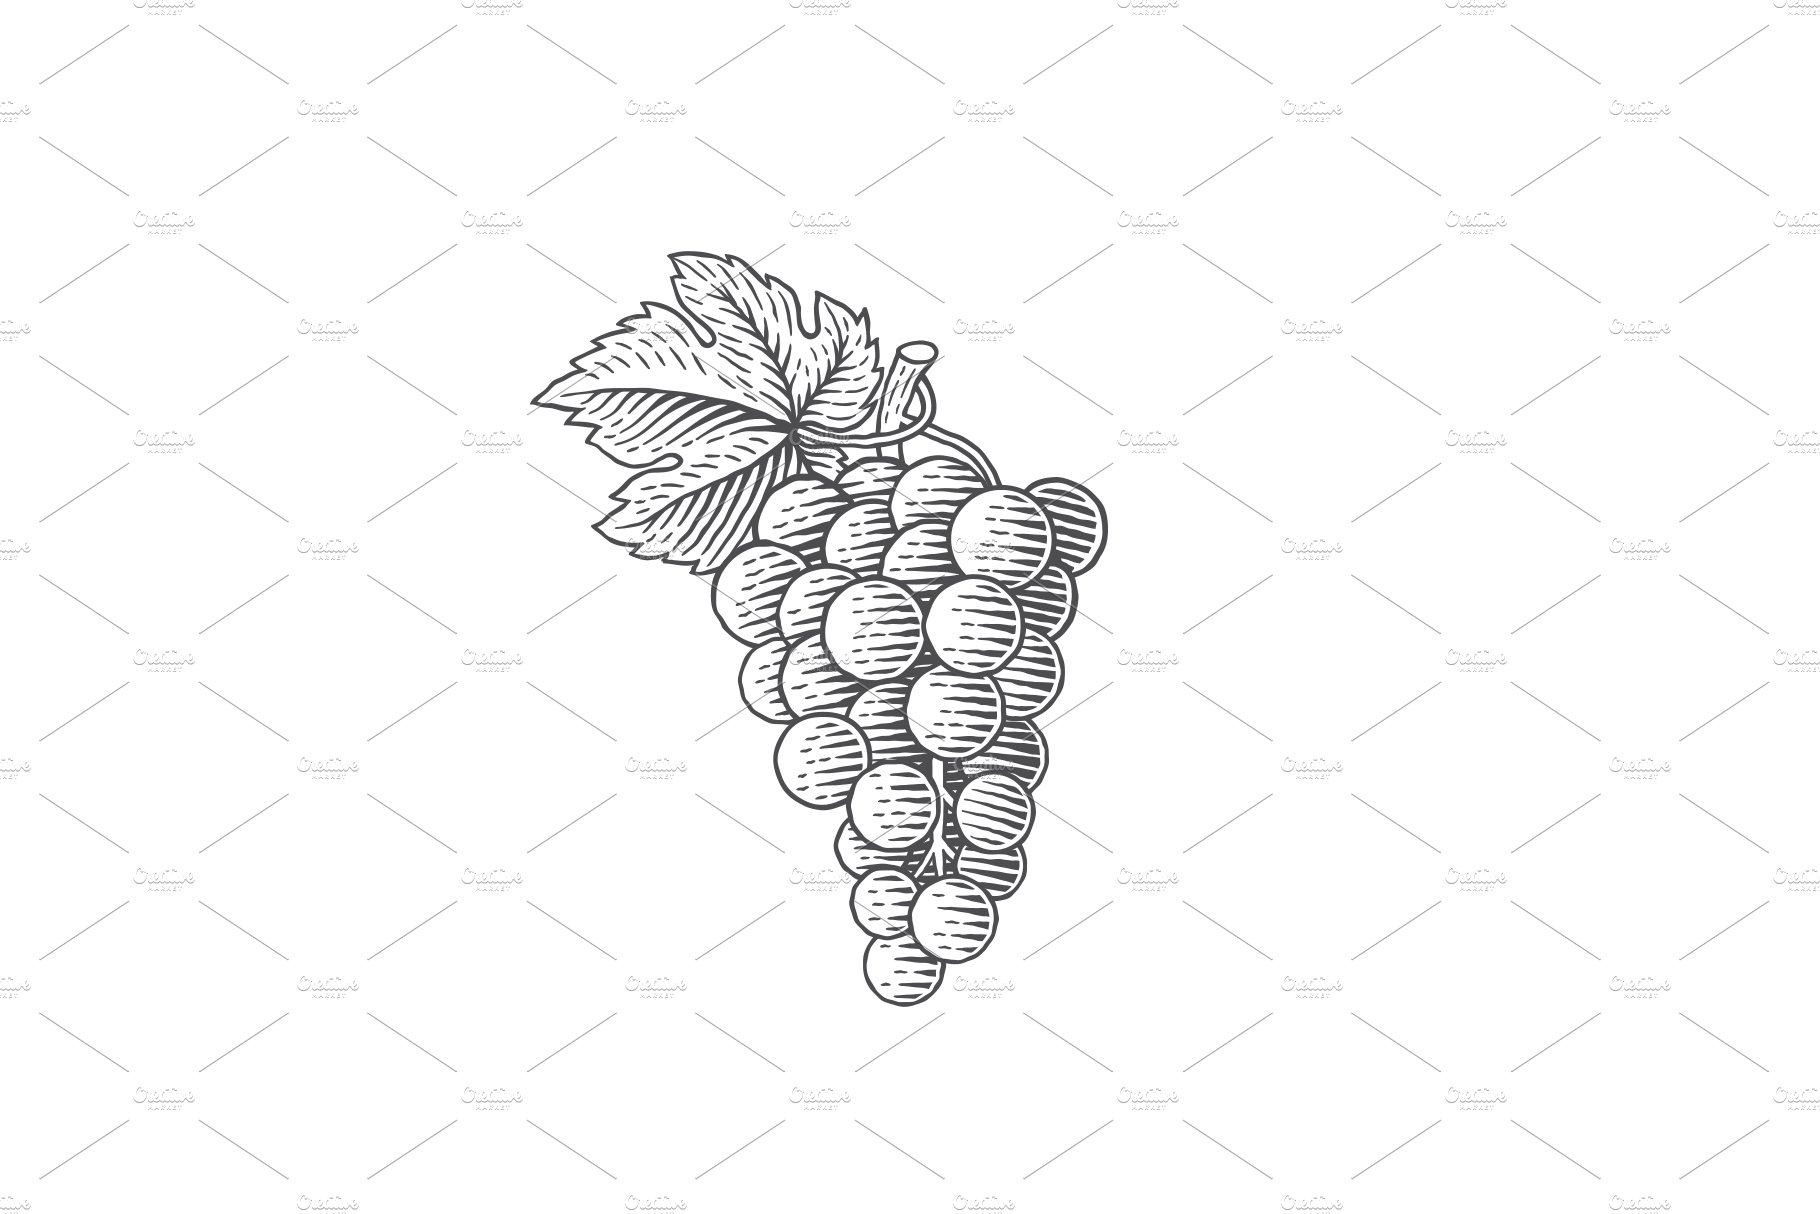 grapes2 515